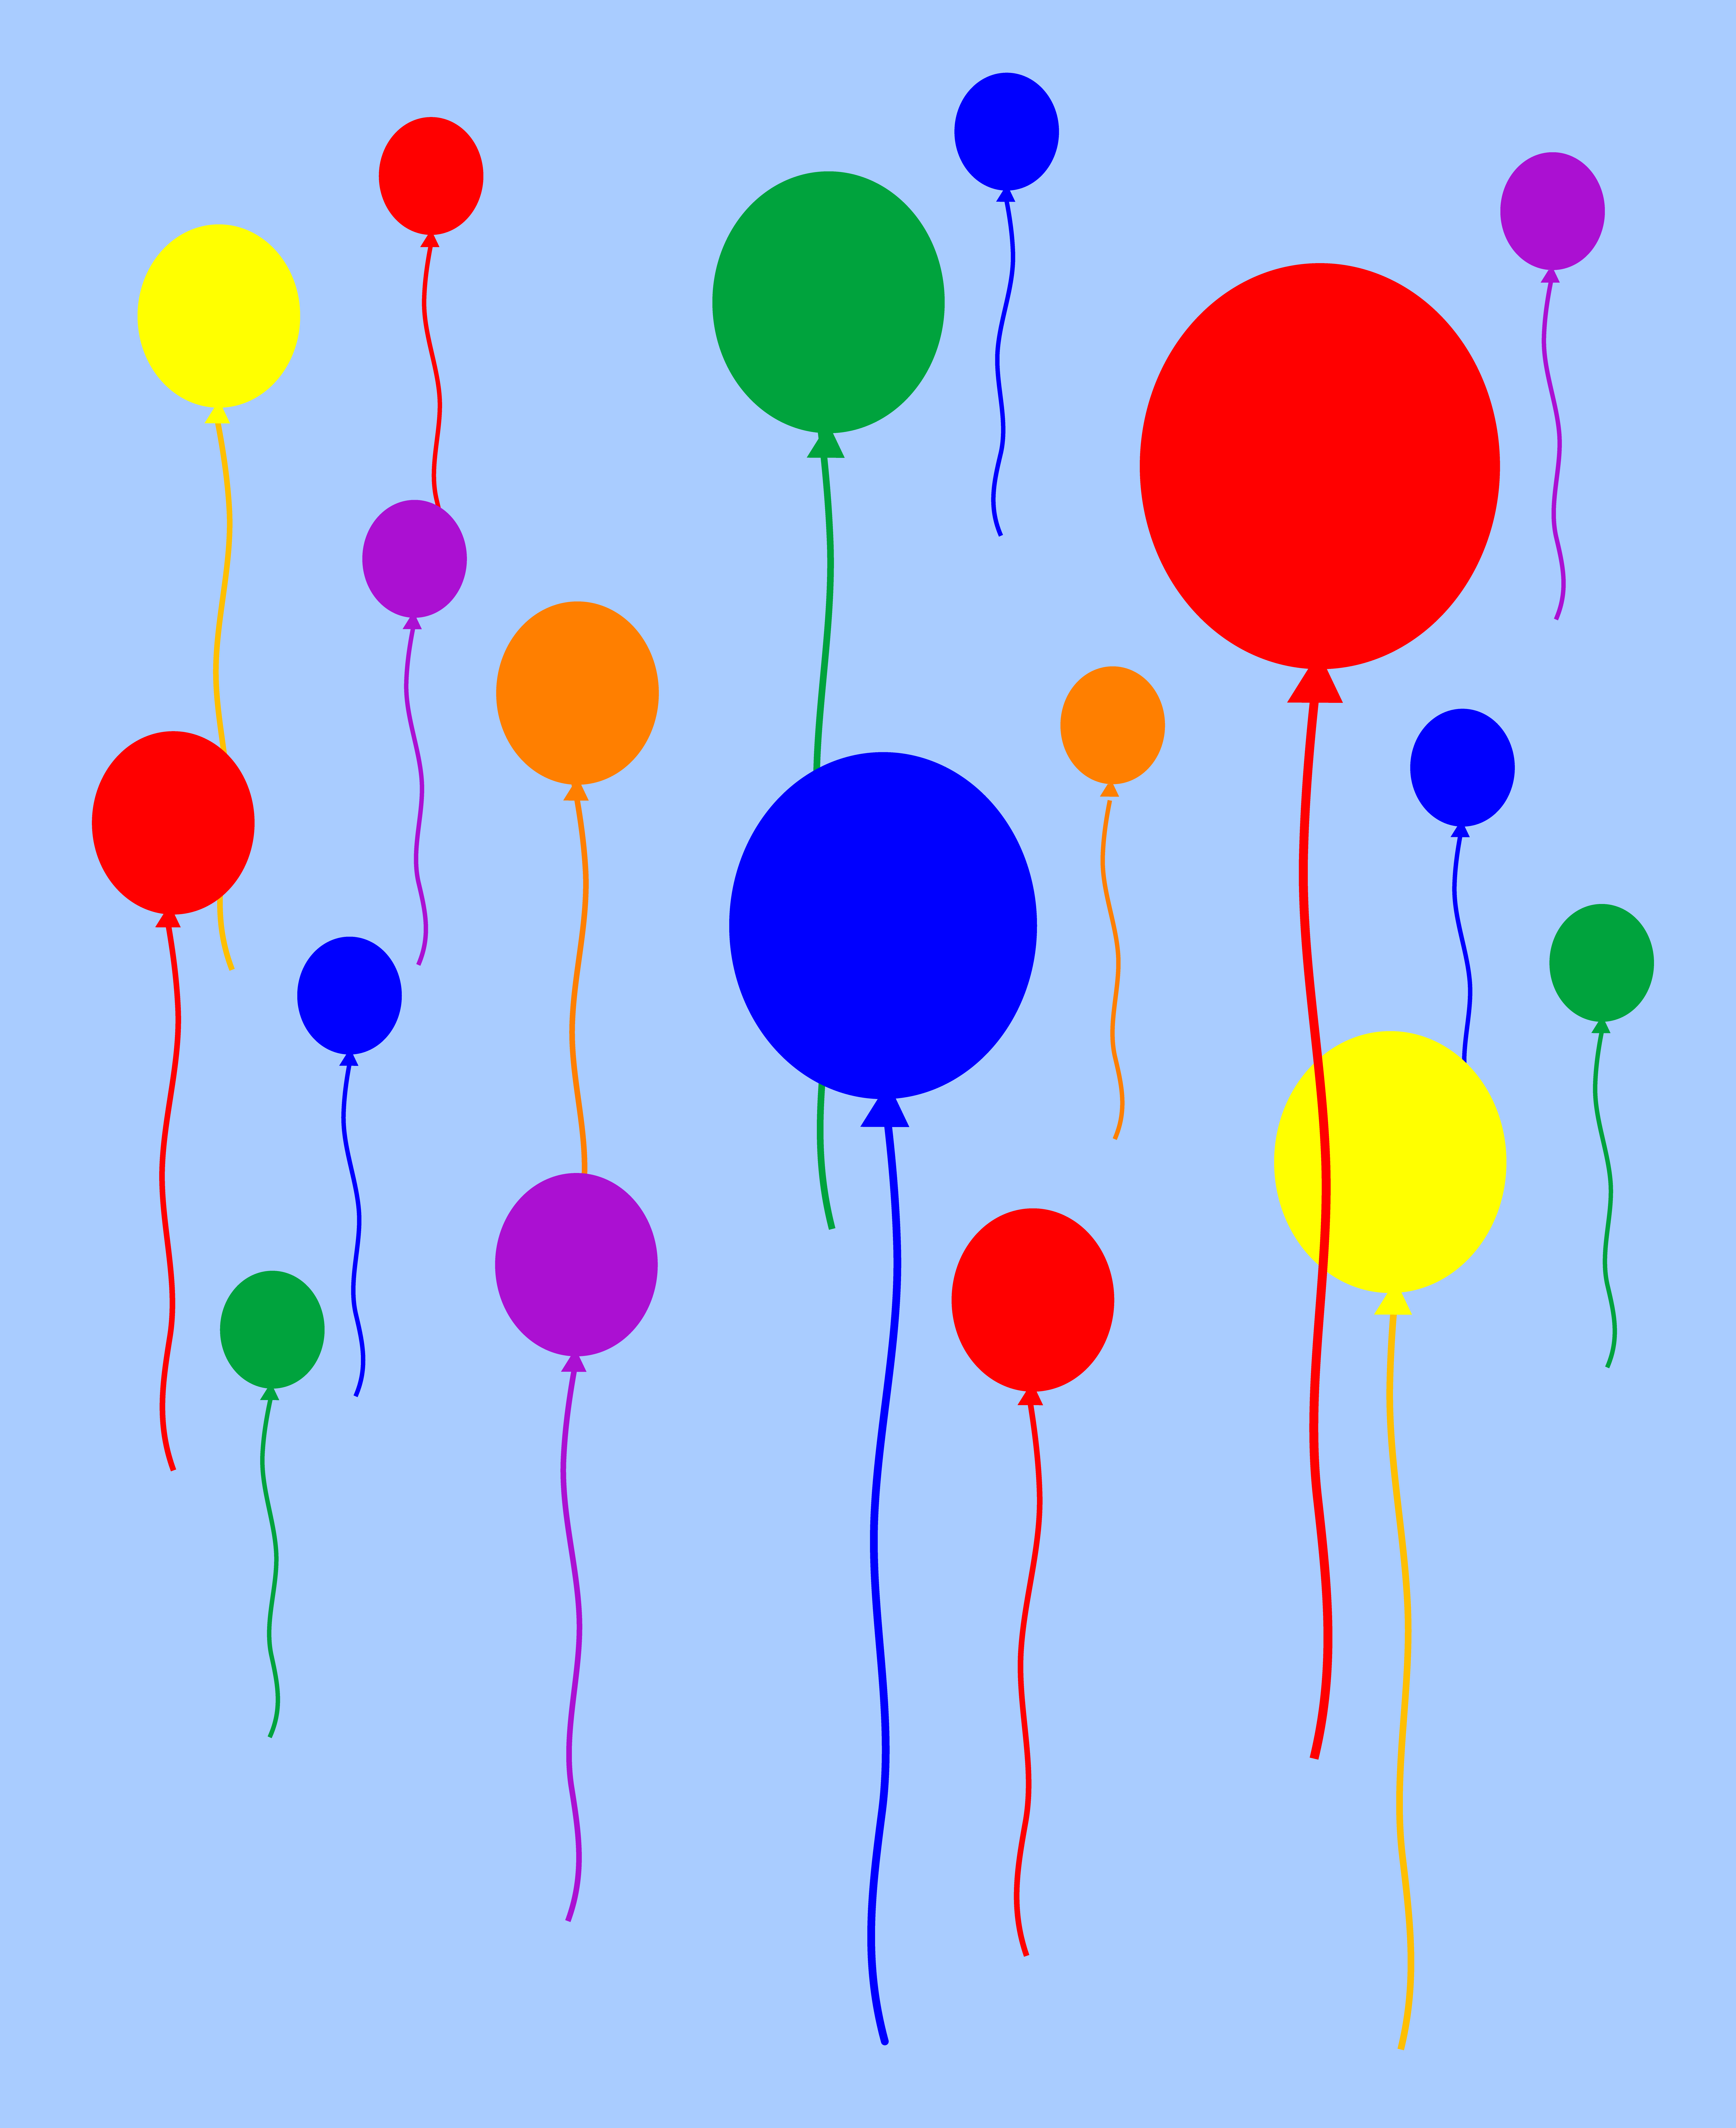 Rainbow Balloons Flying in Sky - Free Clip Art